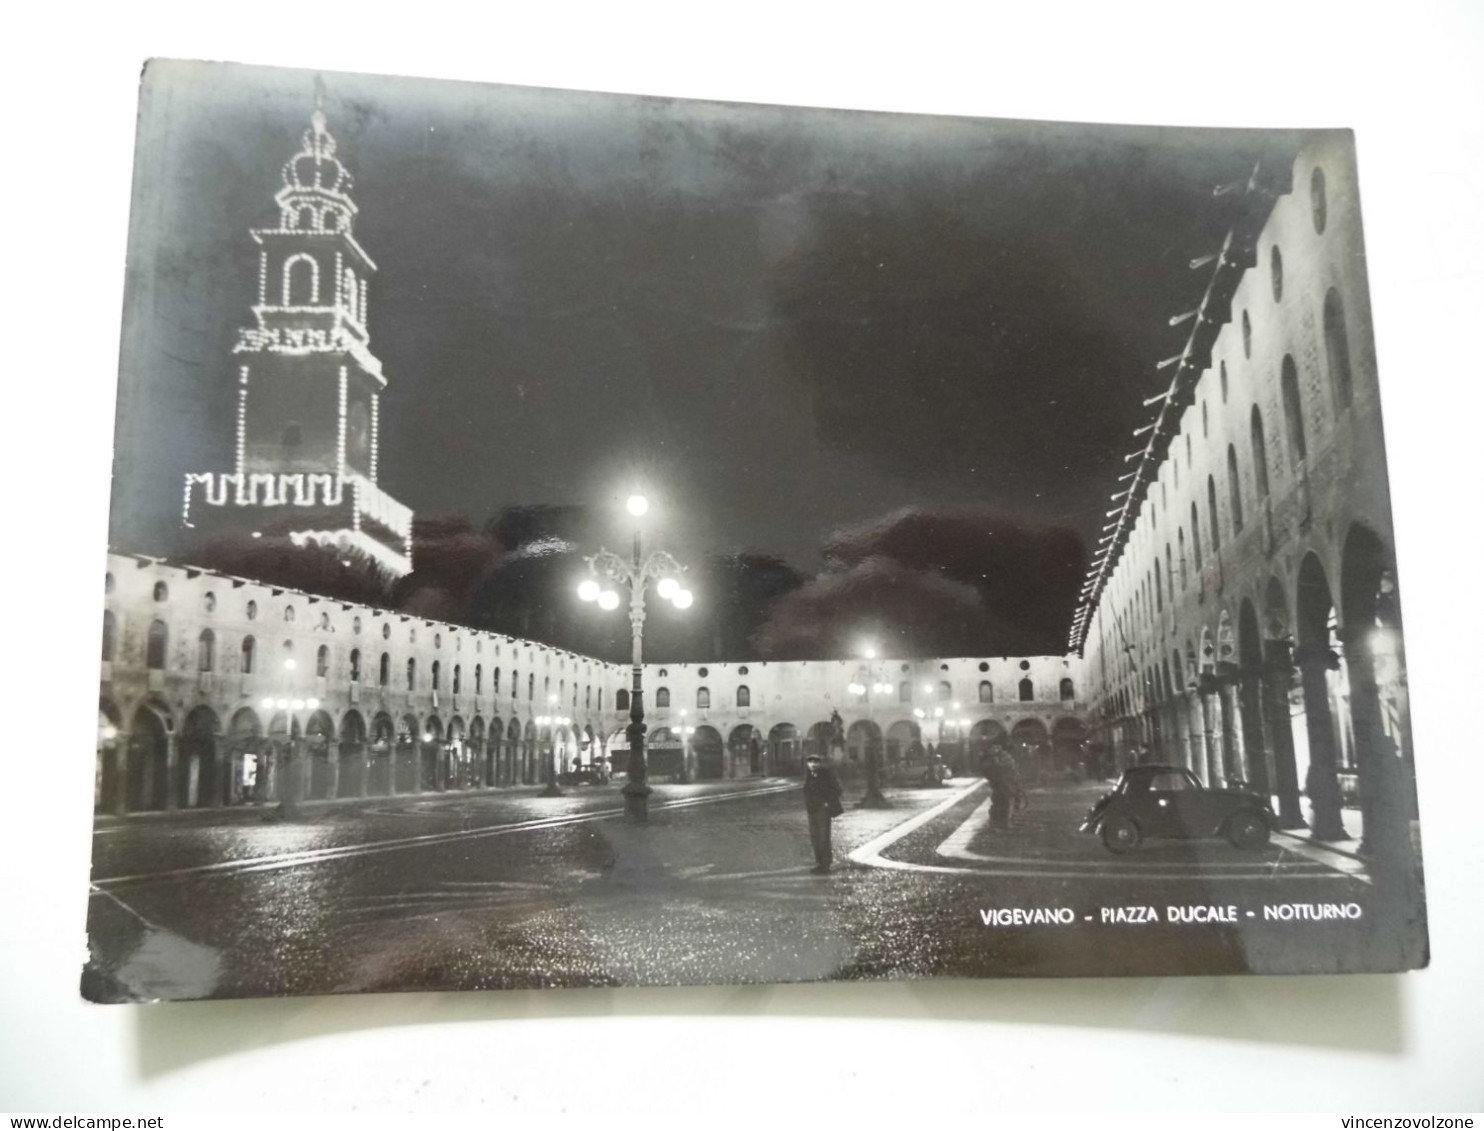 Cartolina Viaggiata "VIGEVANO Piazza Ducale - Notturno"  1955 - Vigevano